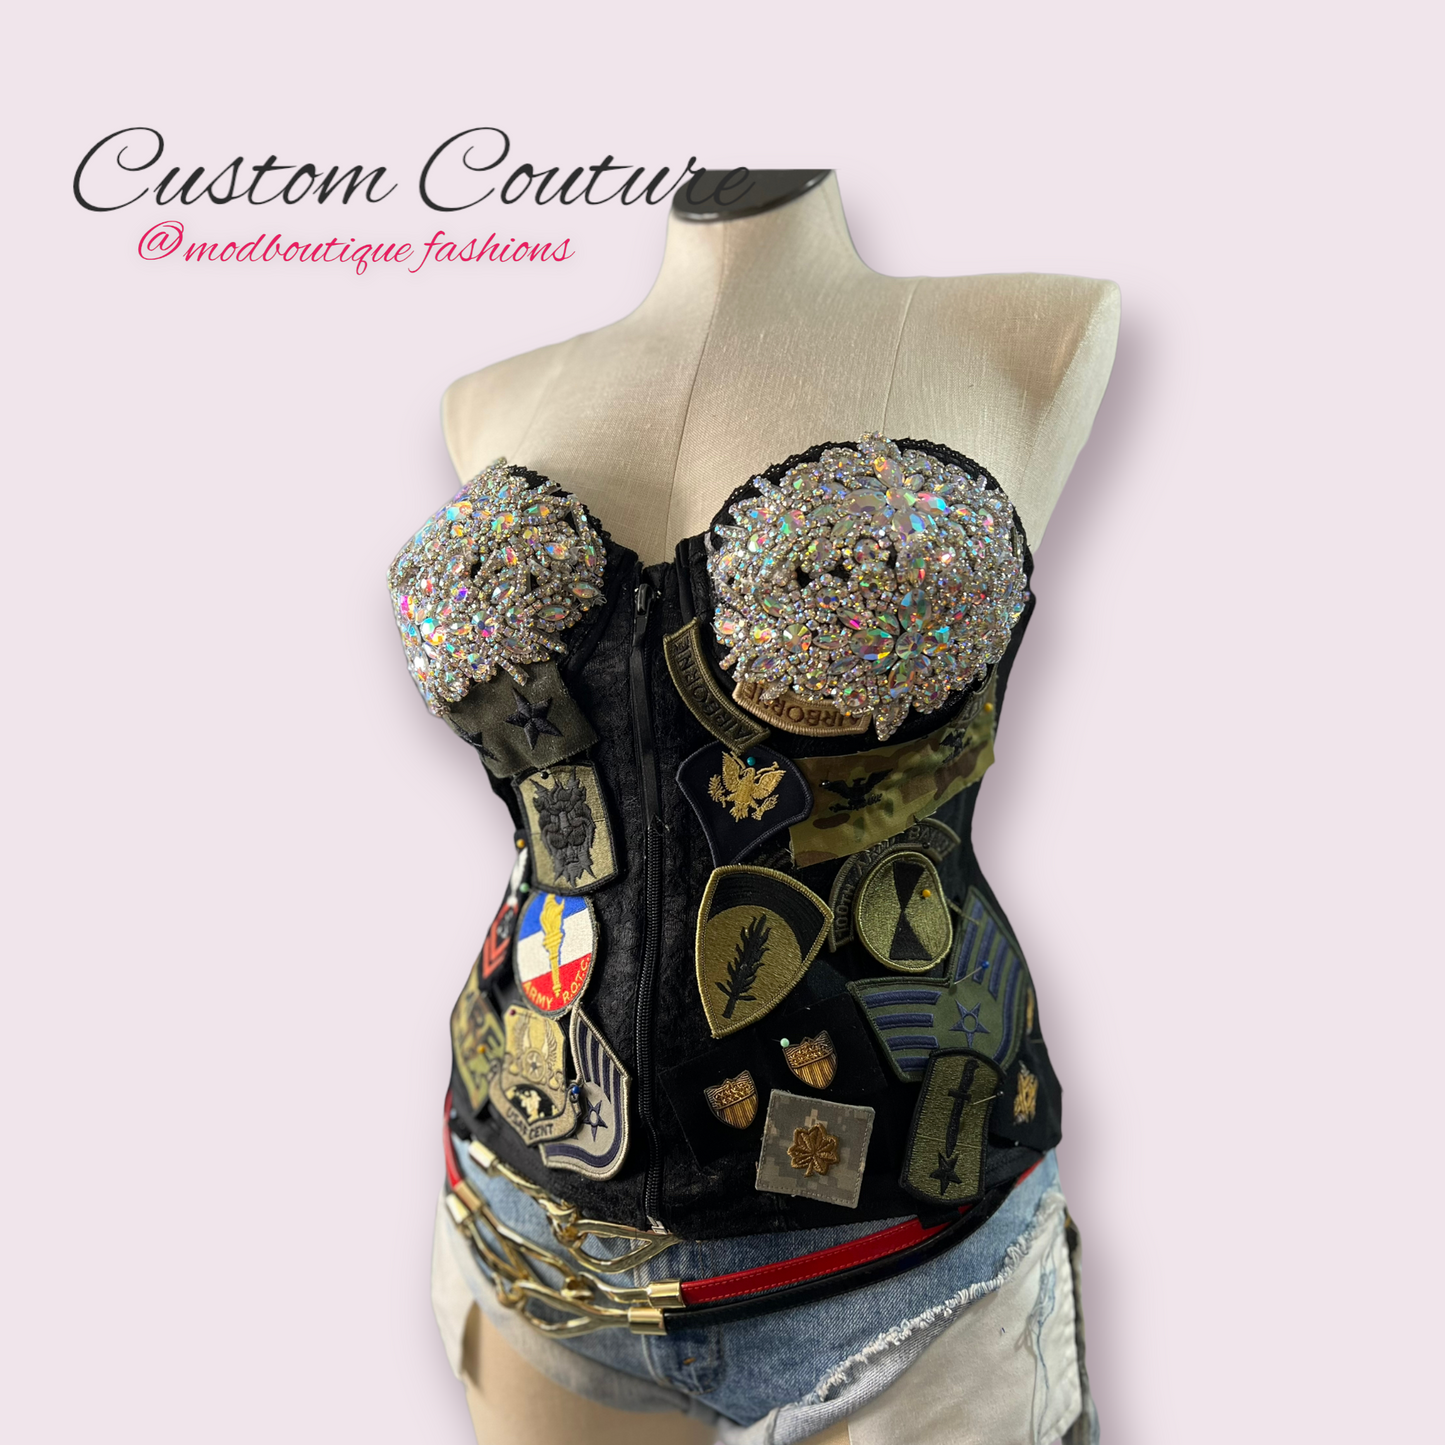 Custom Couture Corset